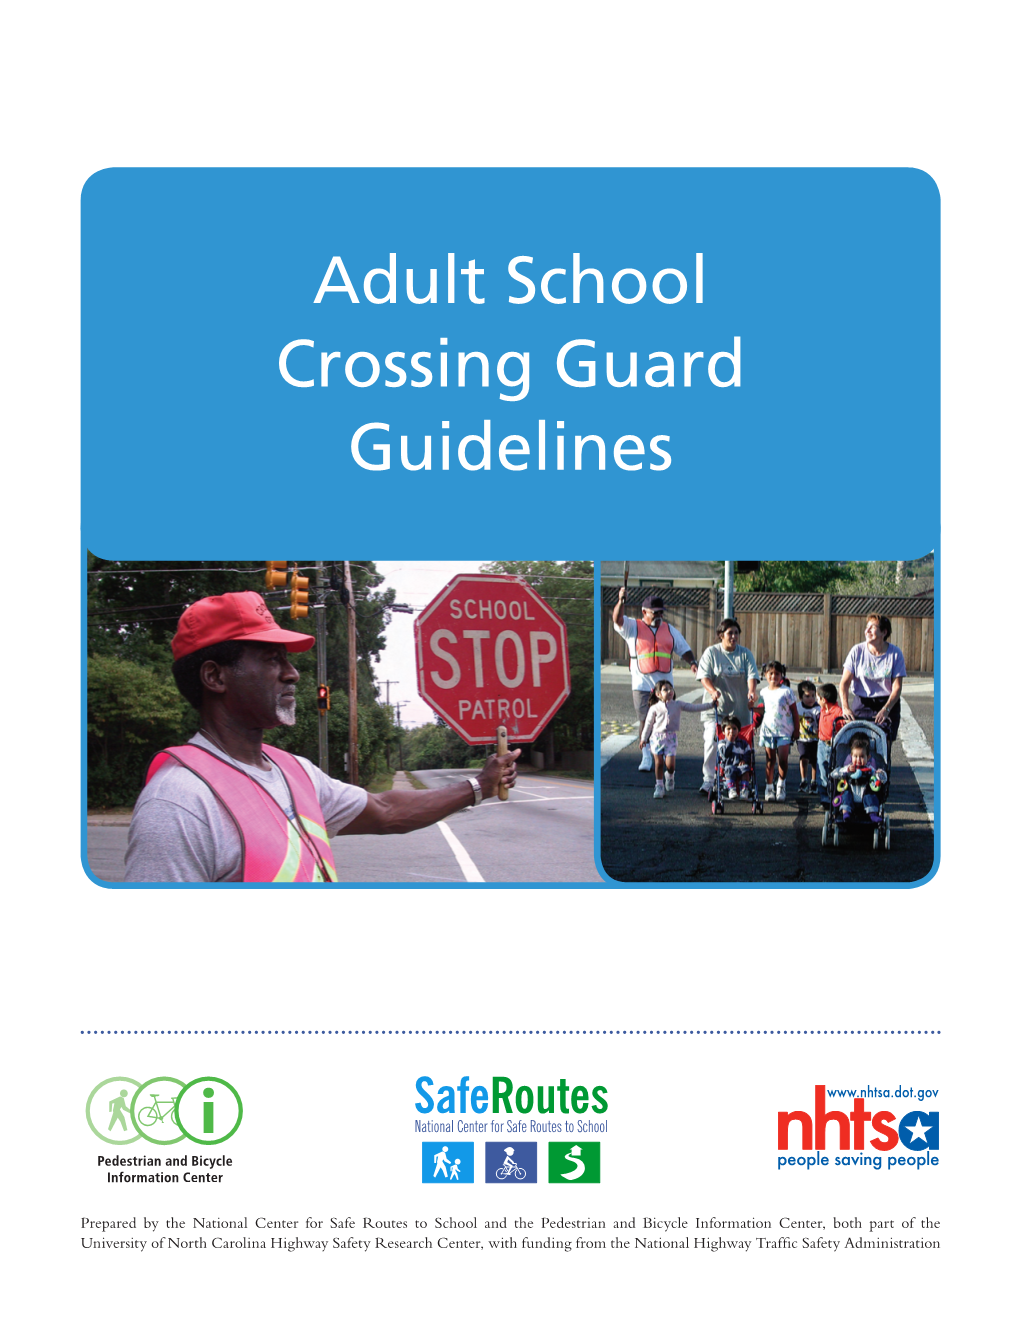 Adult School Crossing Guard Guidelines